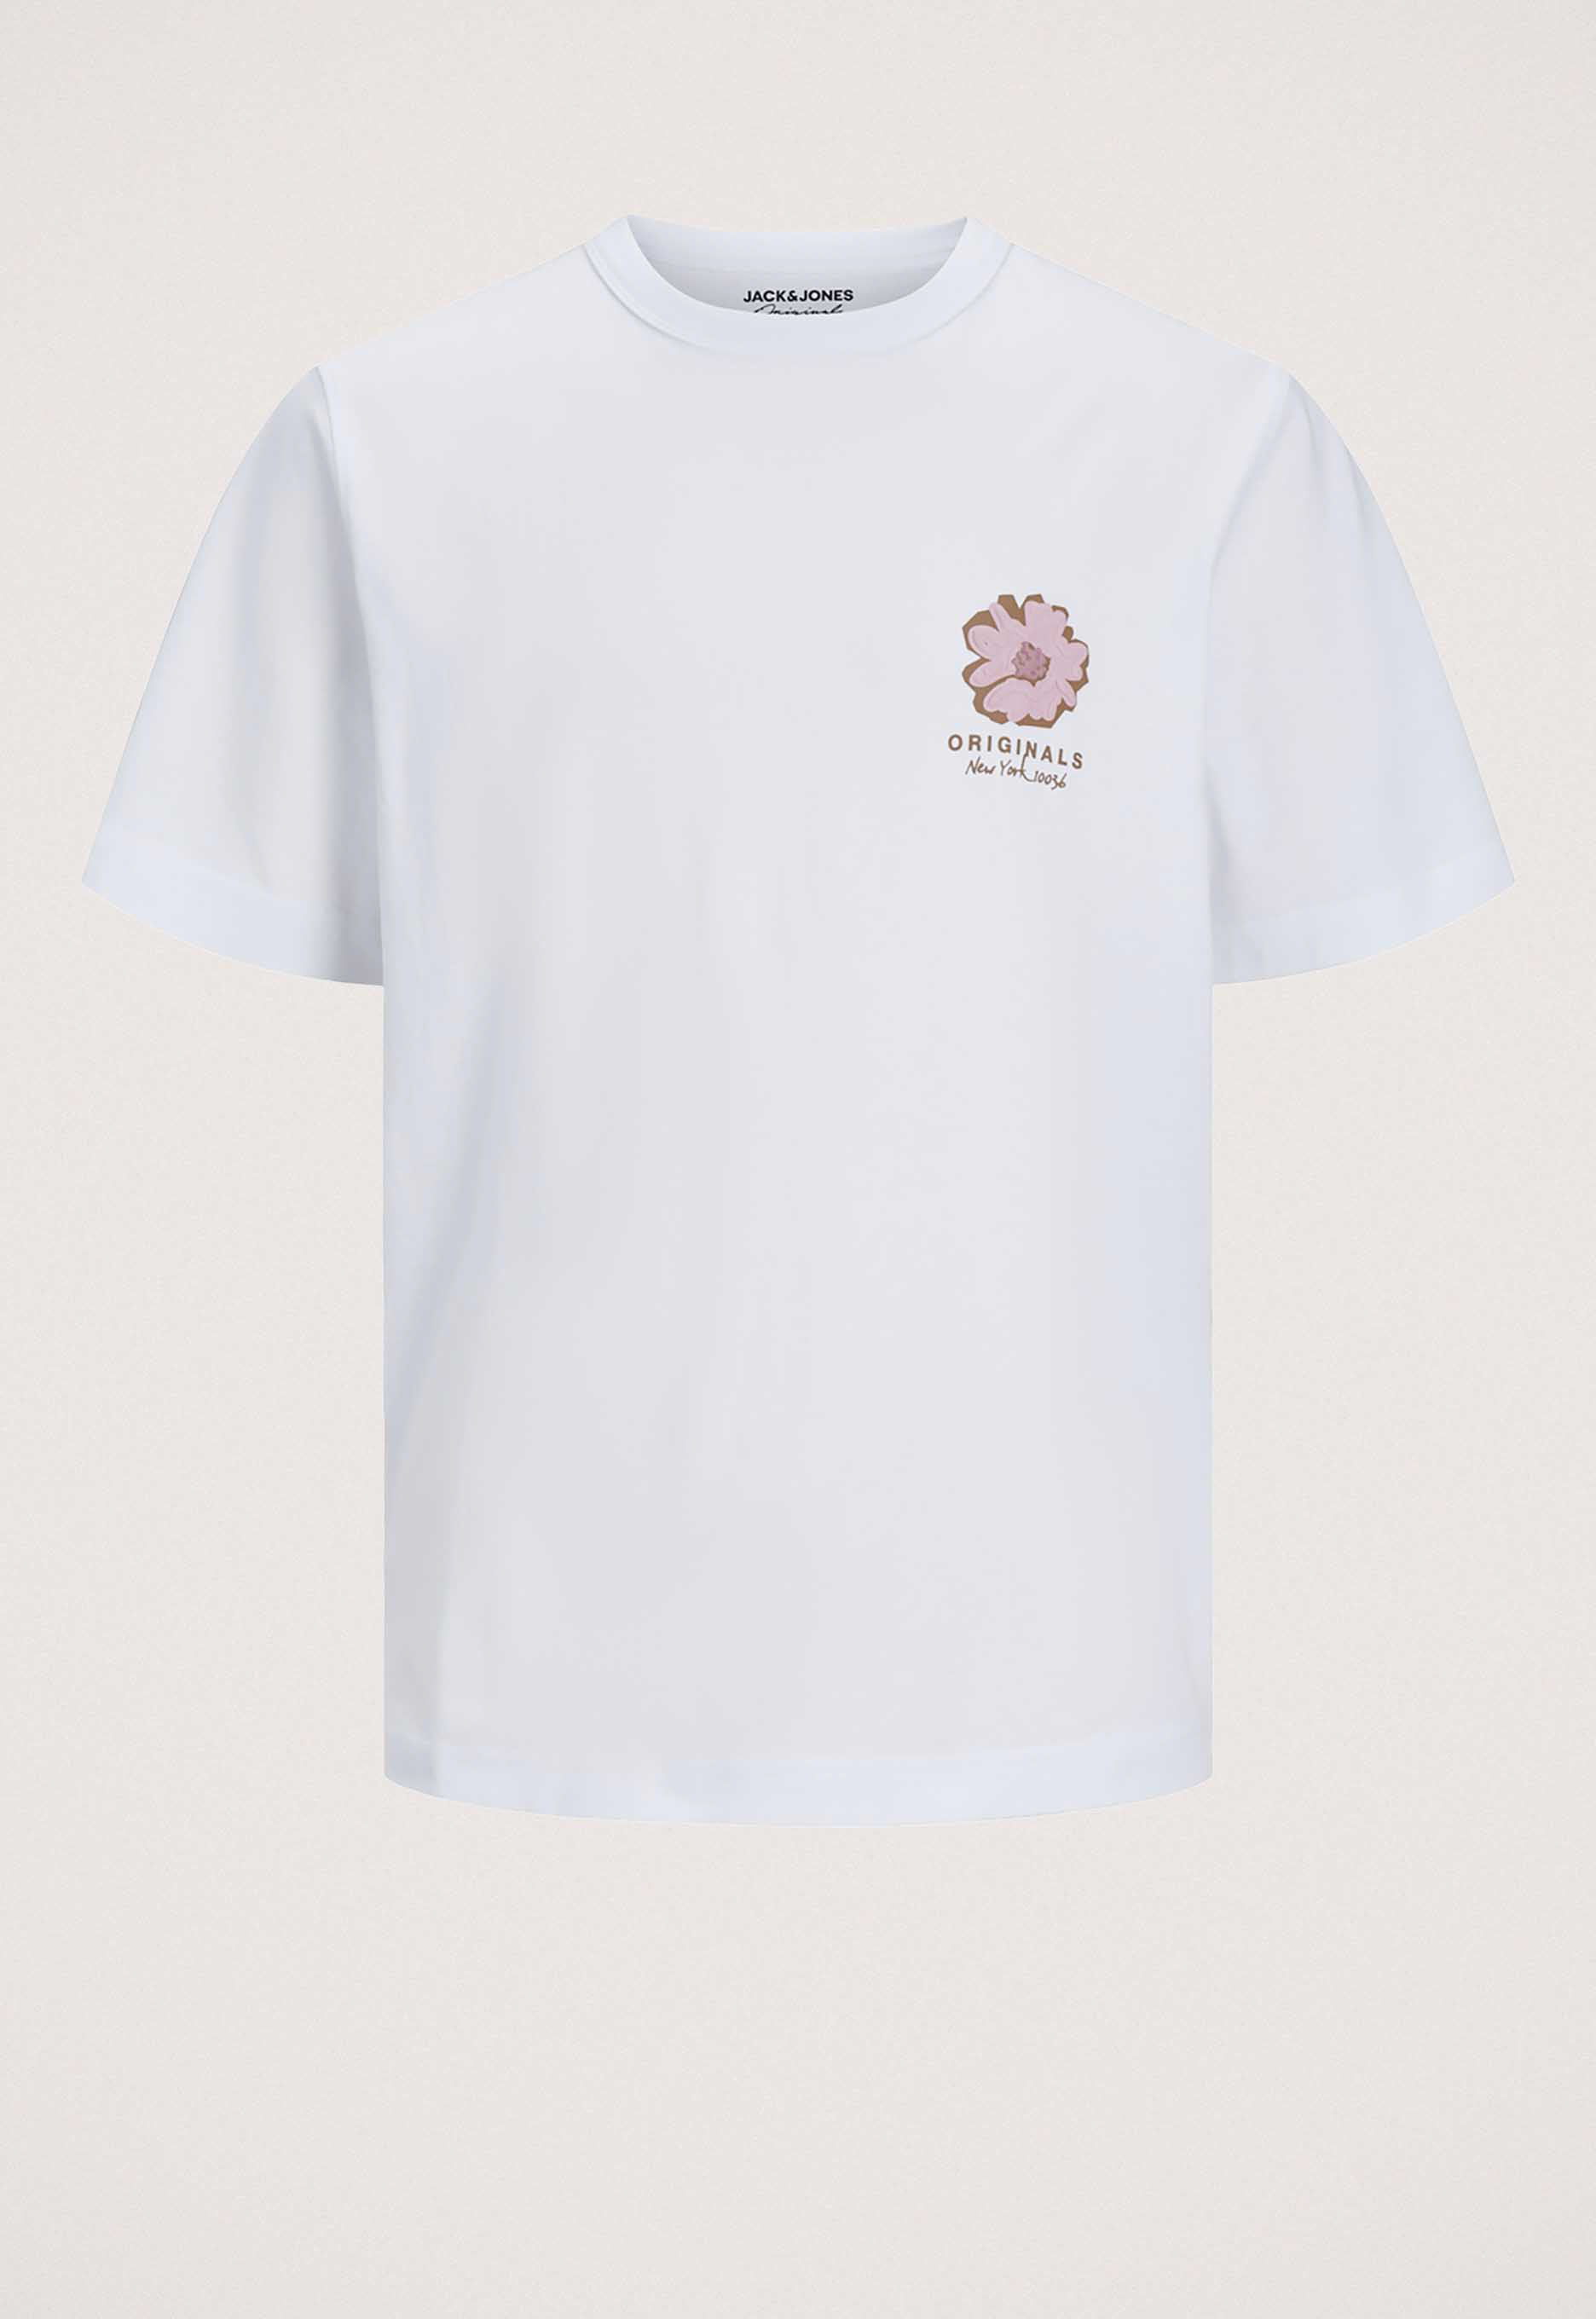 Jack&Jones Easter Activity Flower T-shirt